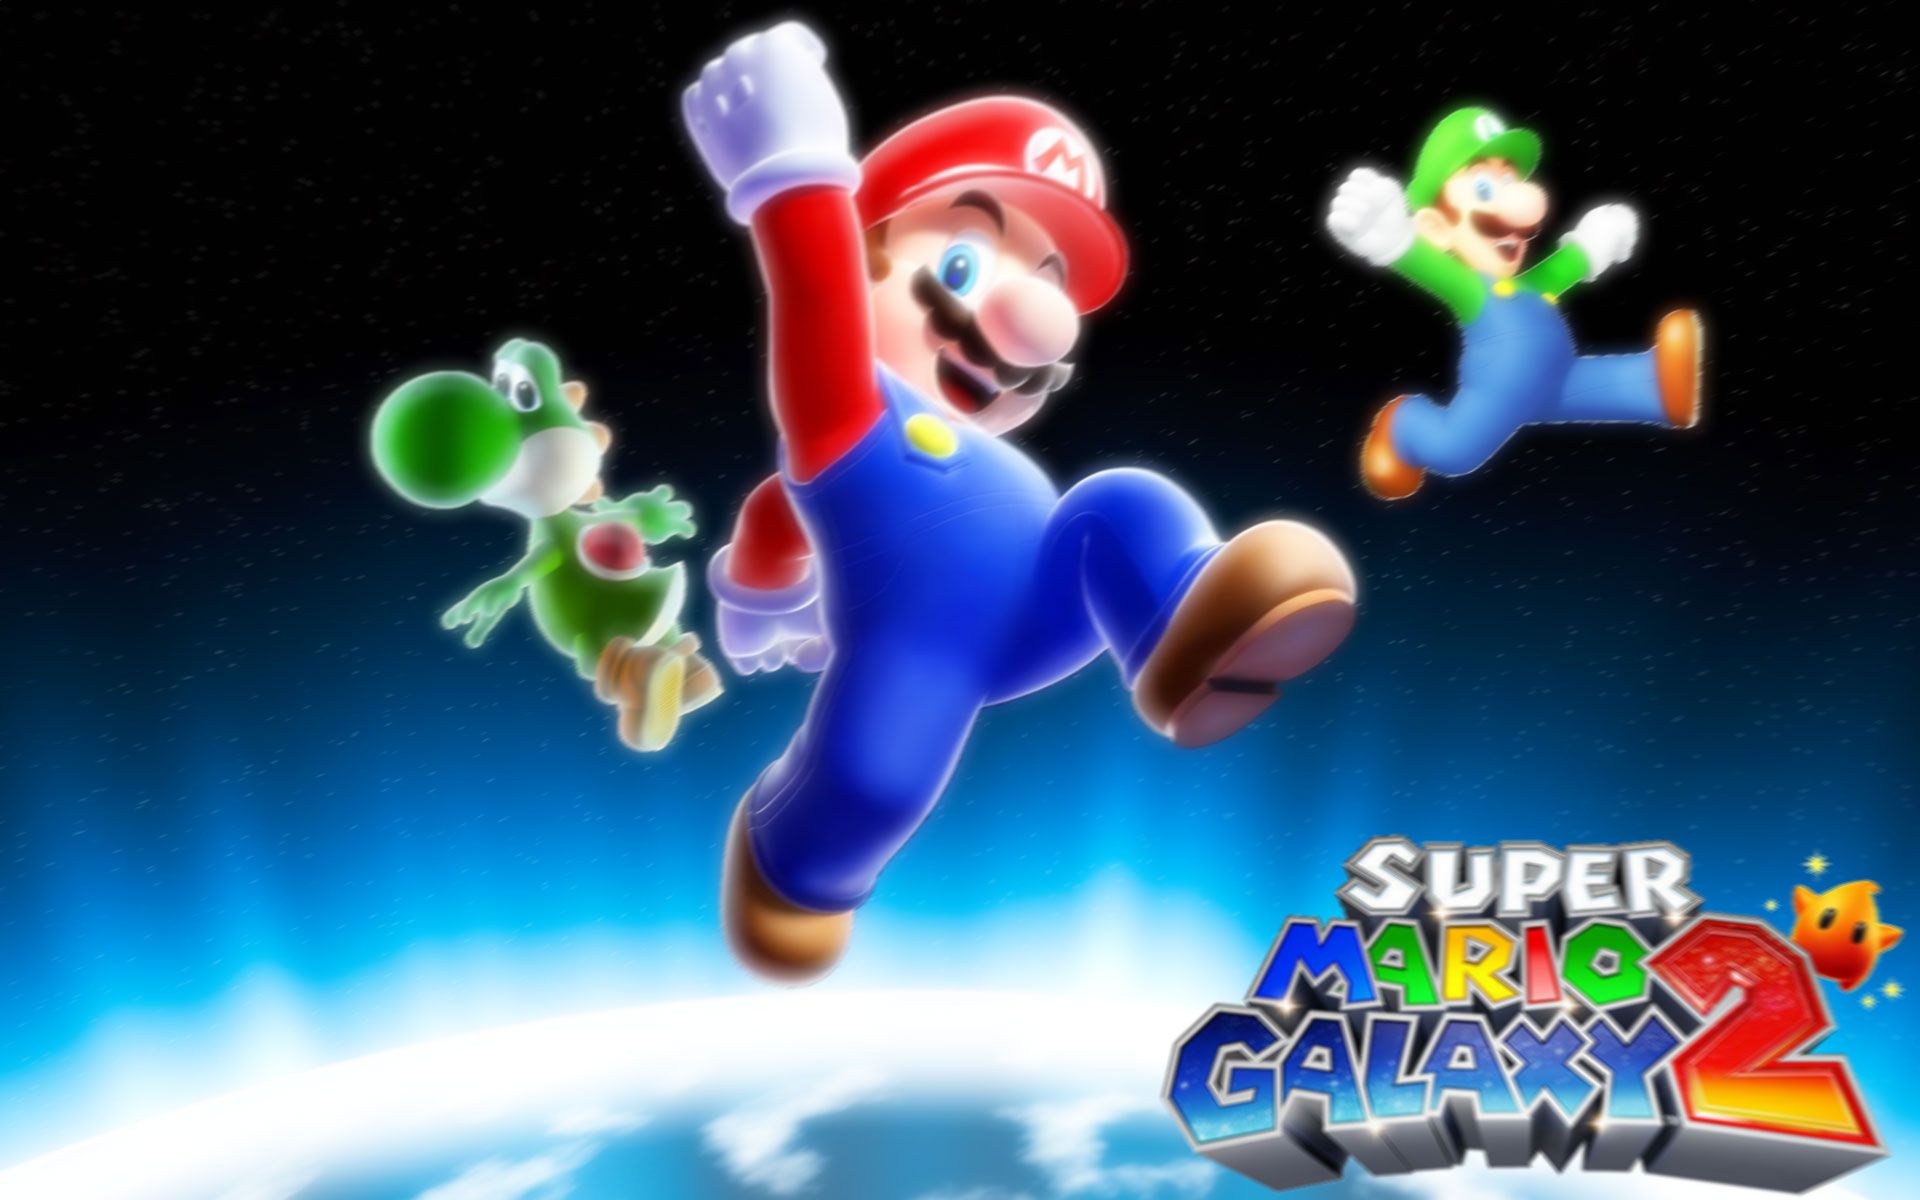 Super Mario Galaxy 2 Wallpaper Hd Wallpapersafari